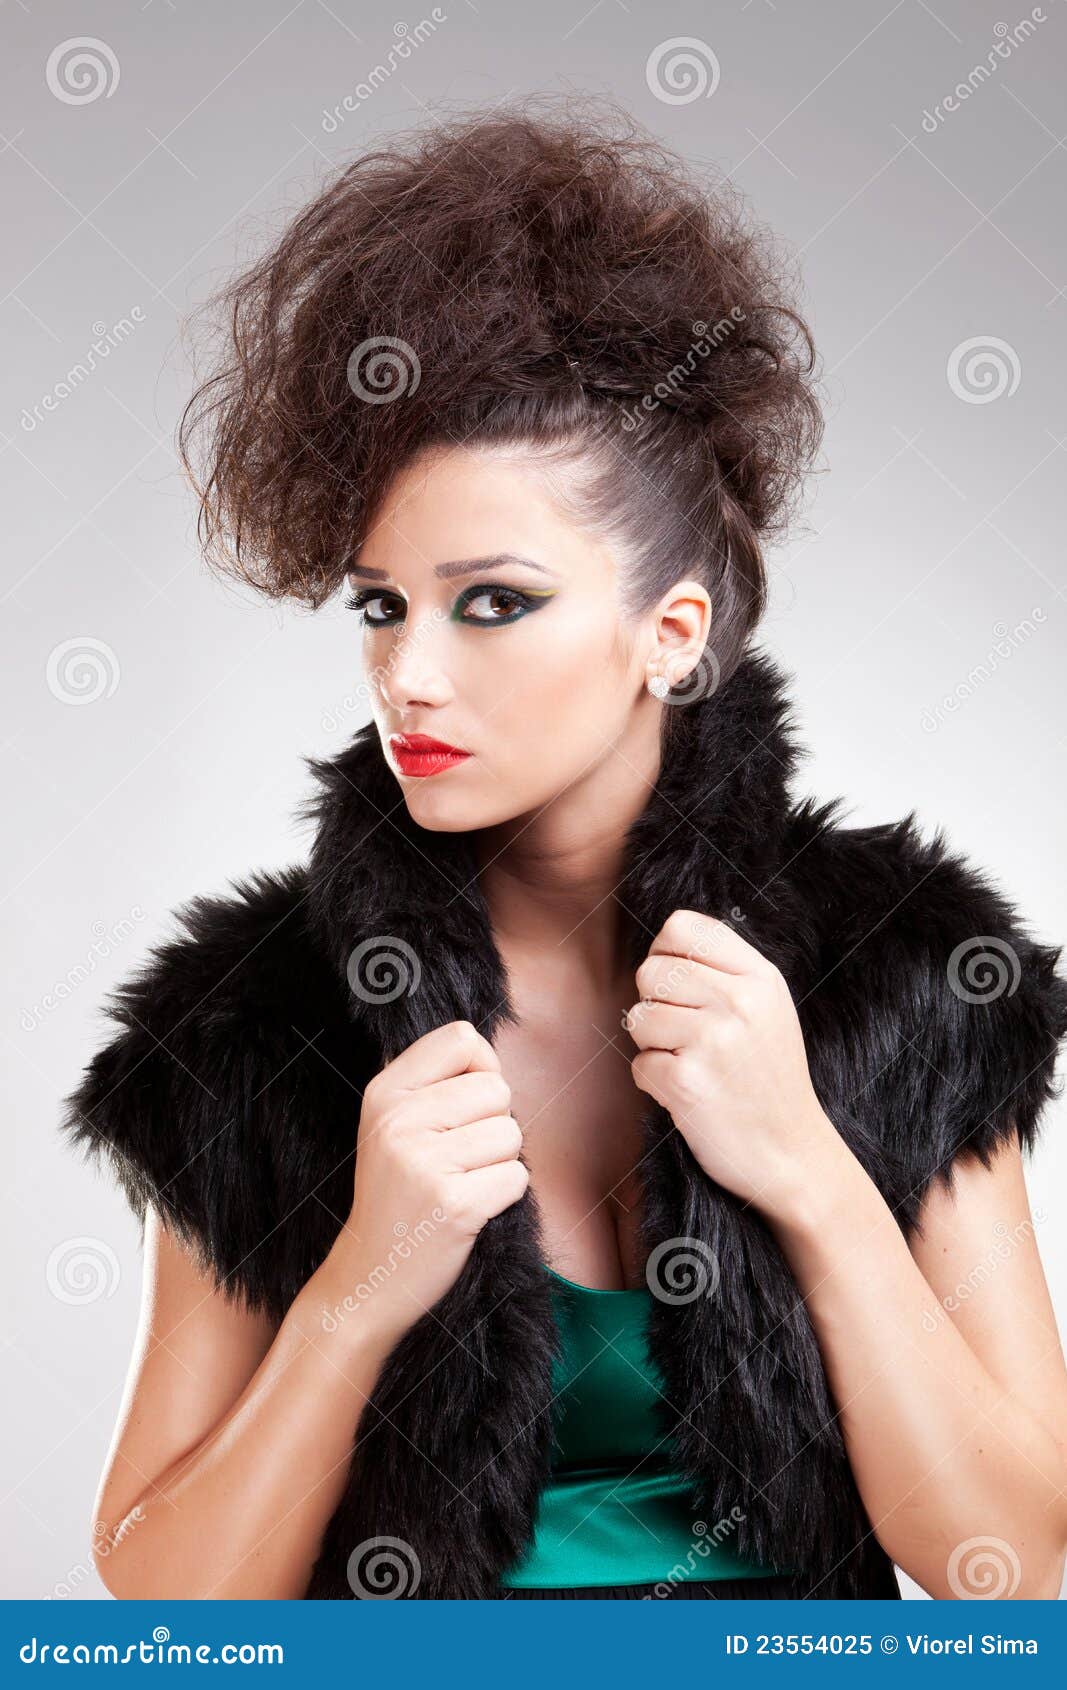 Glamorous woman stock image. Image of glamour, desire - 23554025